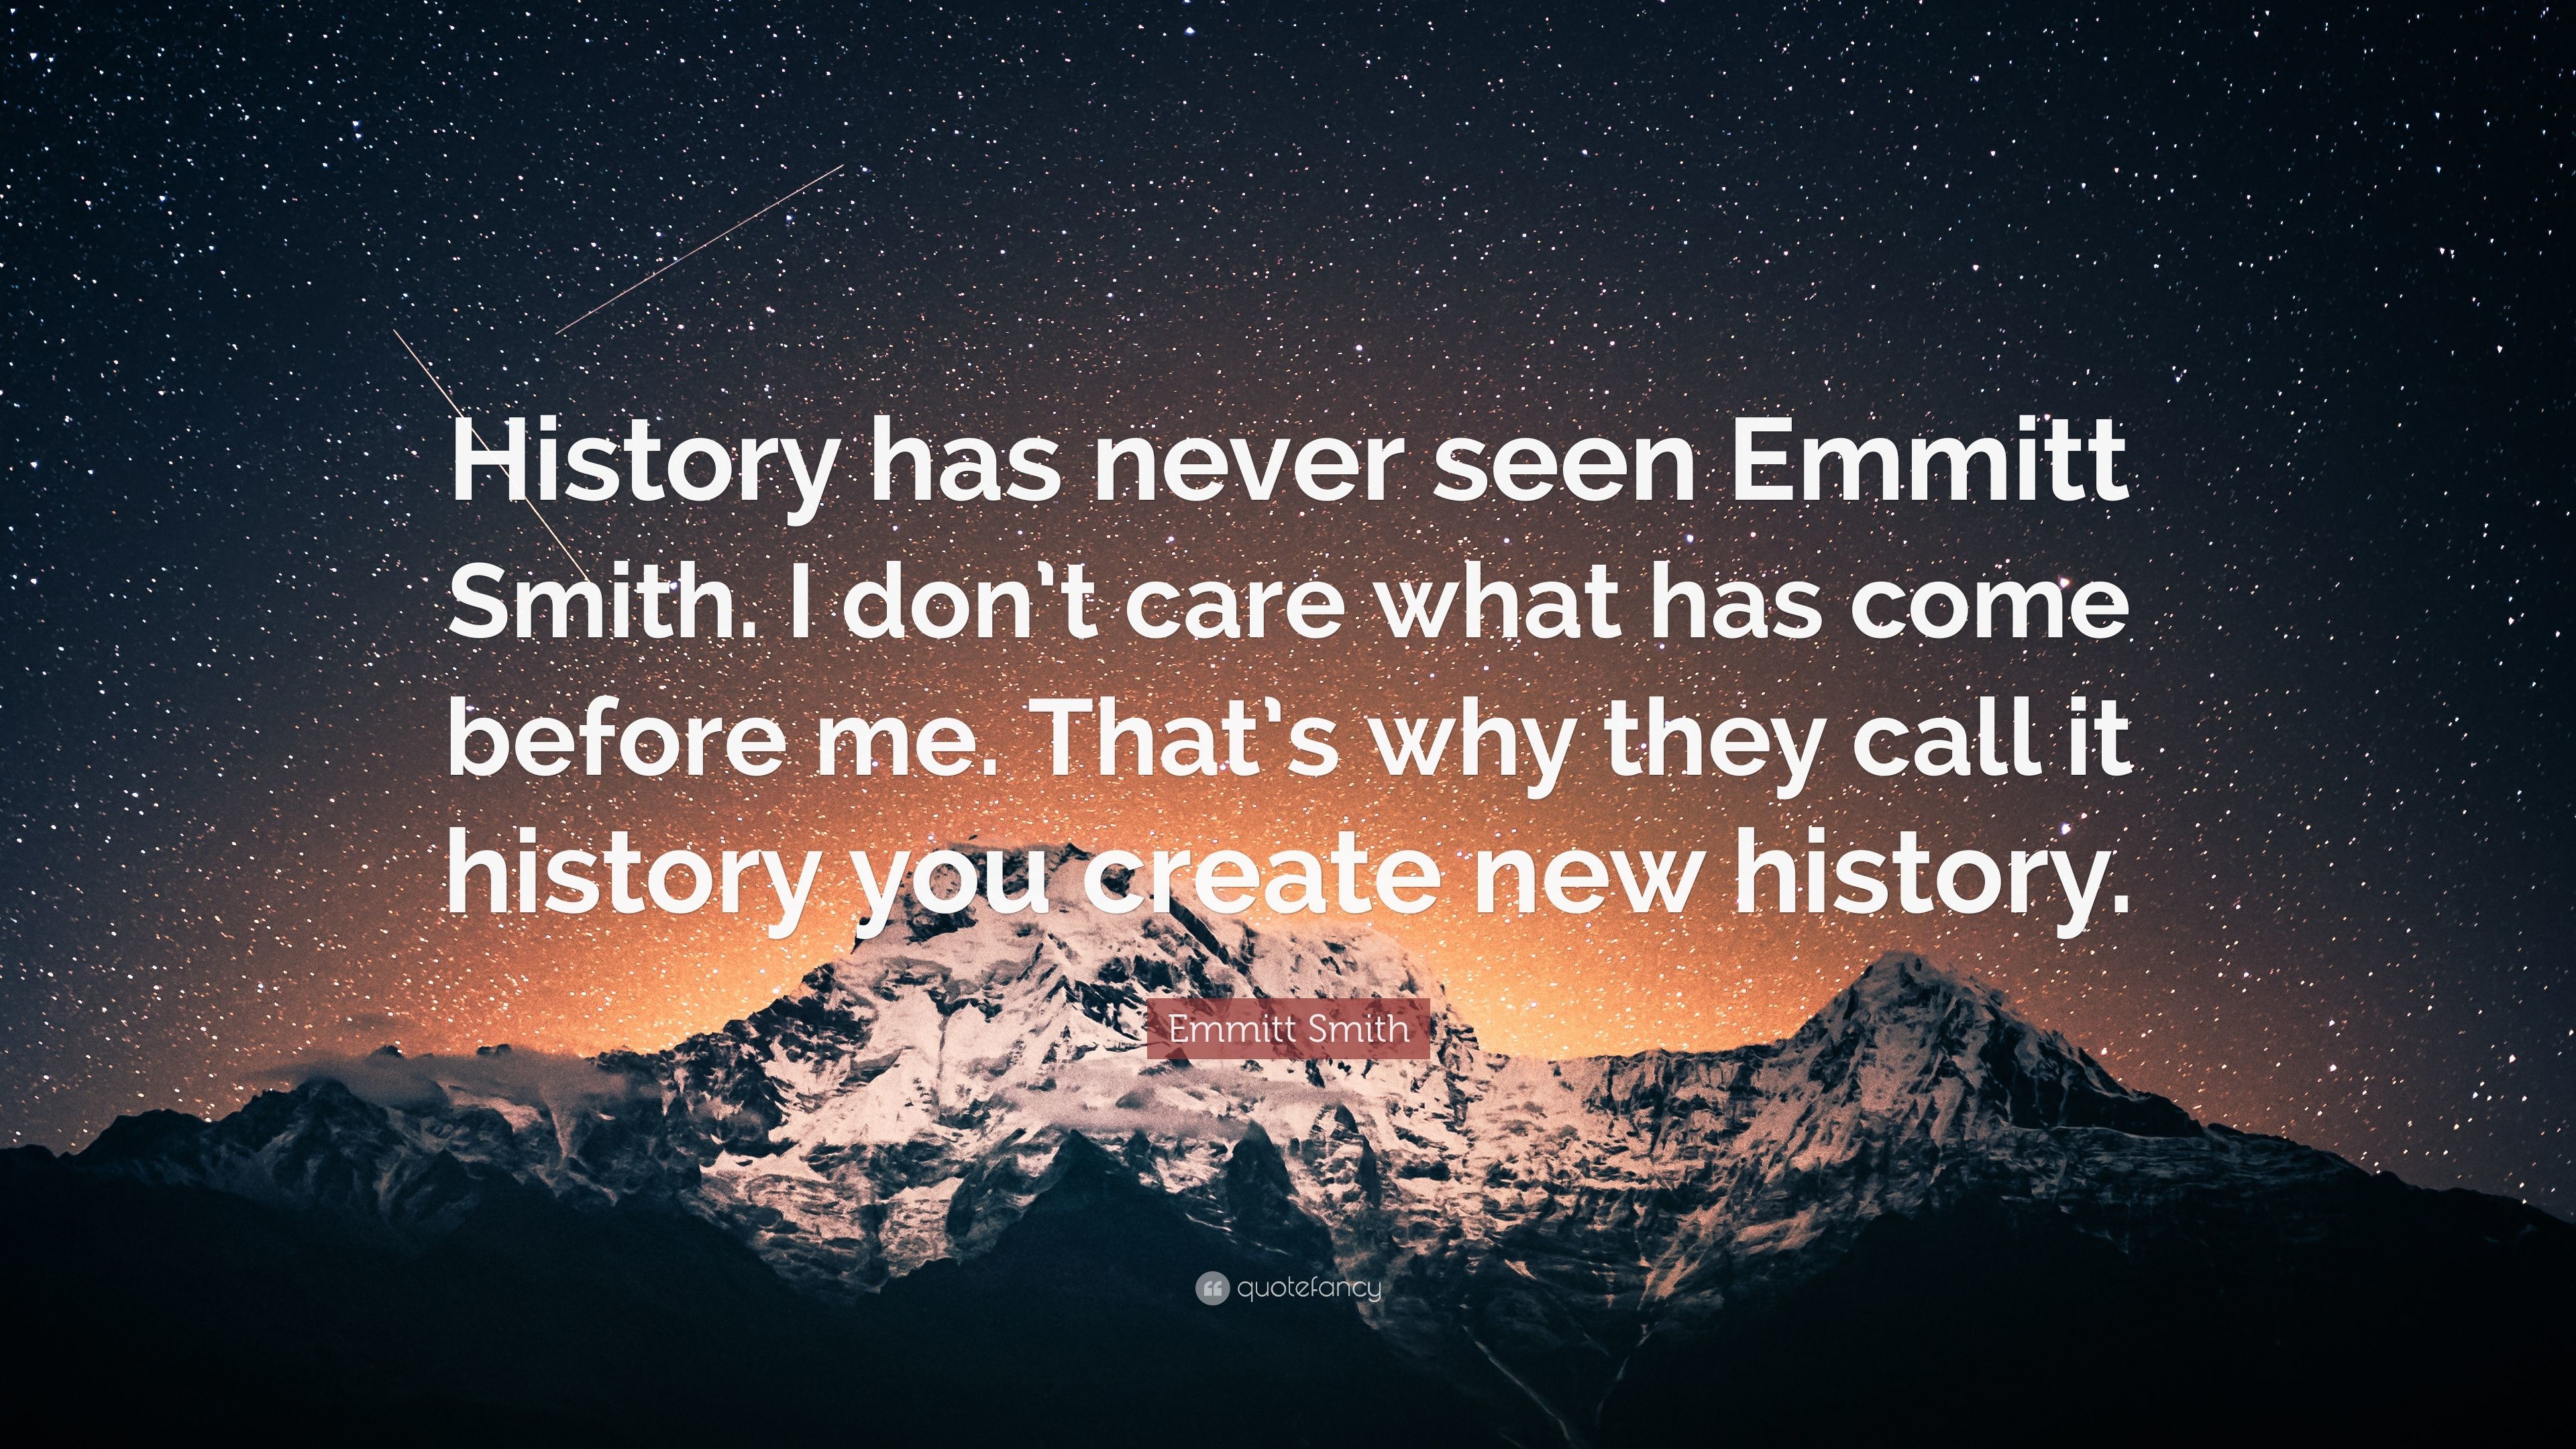 3840x2160 Emmitt Smith Quote: “History has never seen Emmitt Smith. I don't